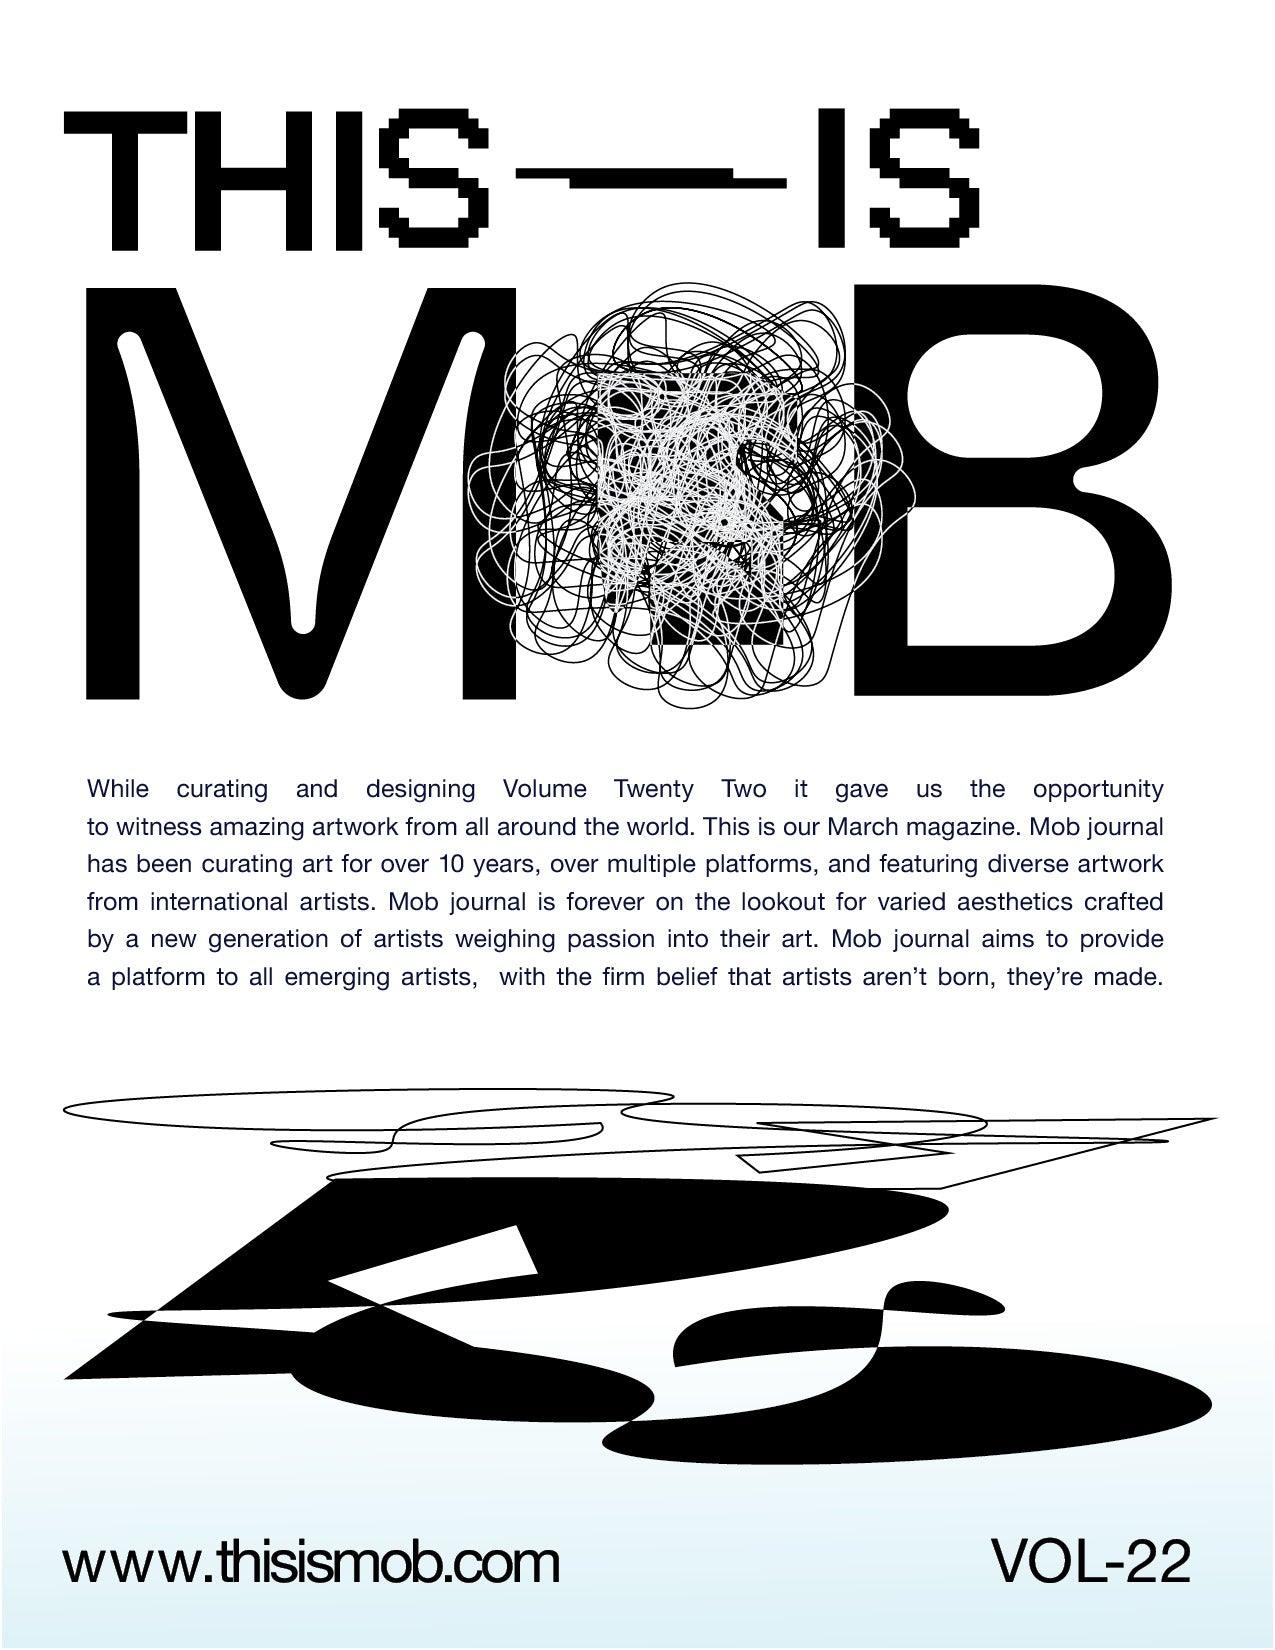 MOB JOURNAL | VOLUME TWENTY TWO | ISSUE #12 - Mob Journal